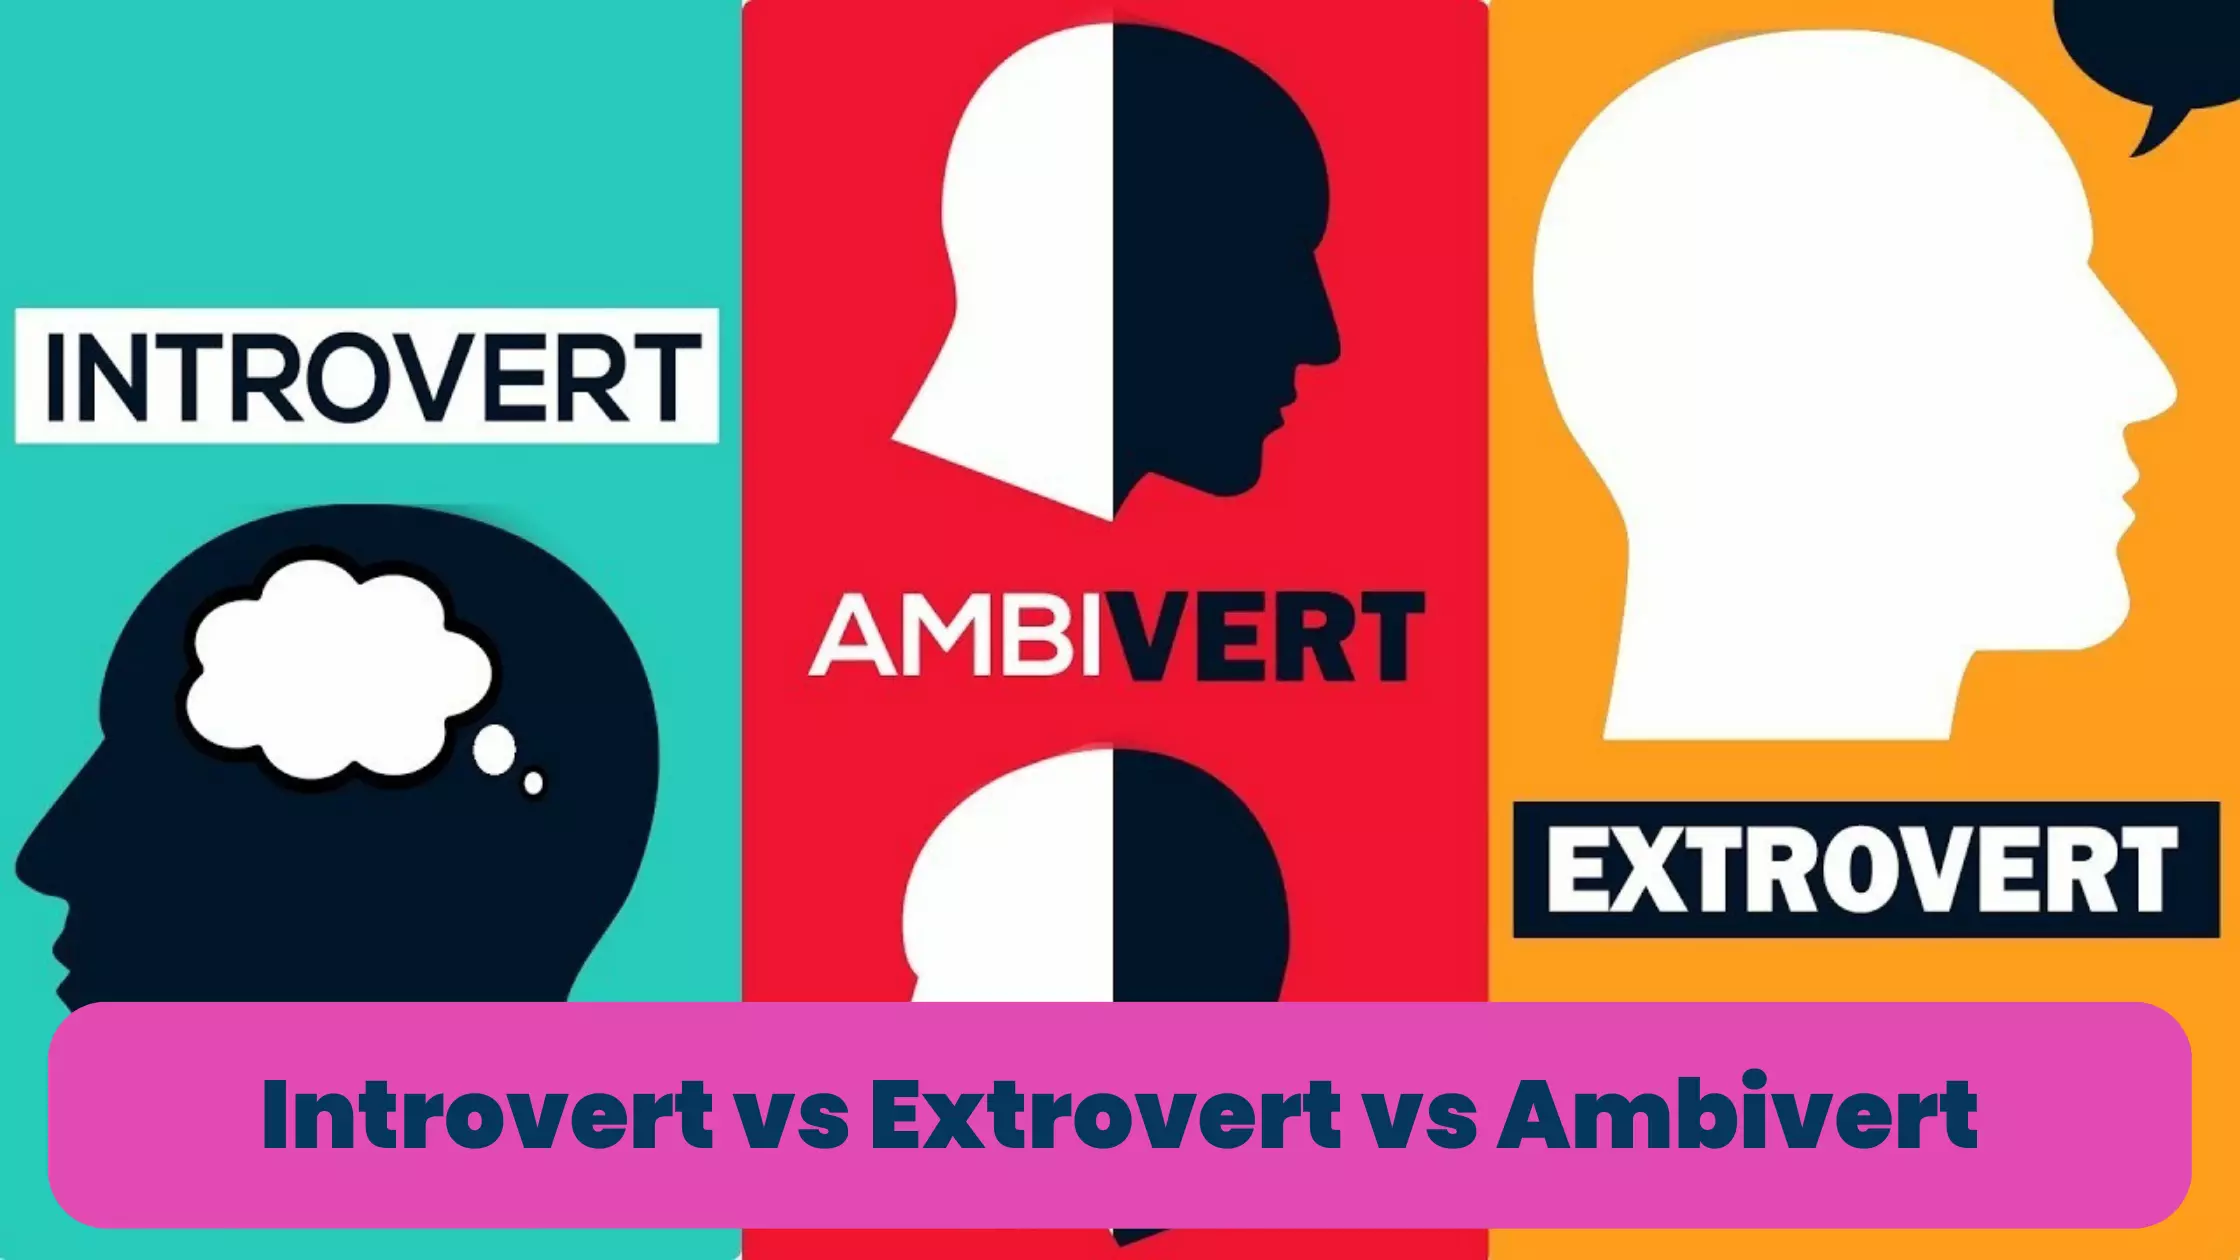 Introvert vs Extrovert vs Ambivert